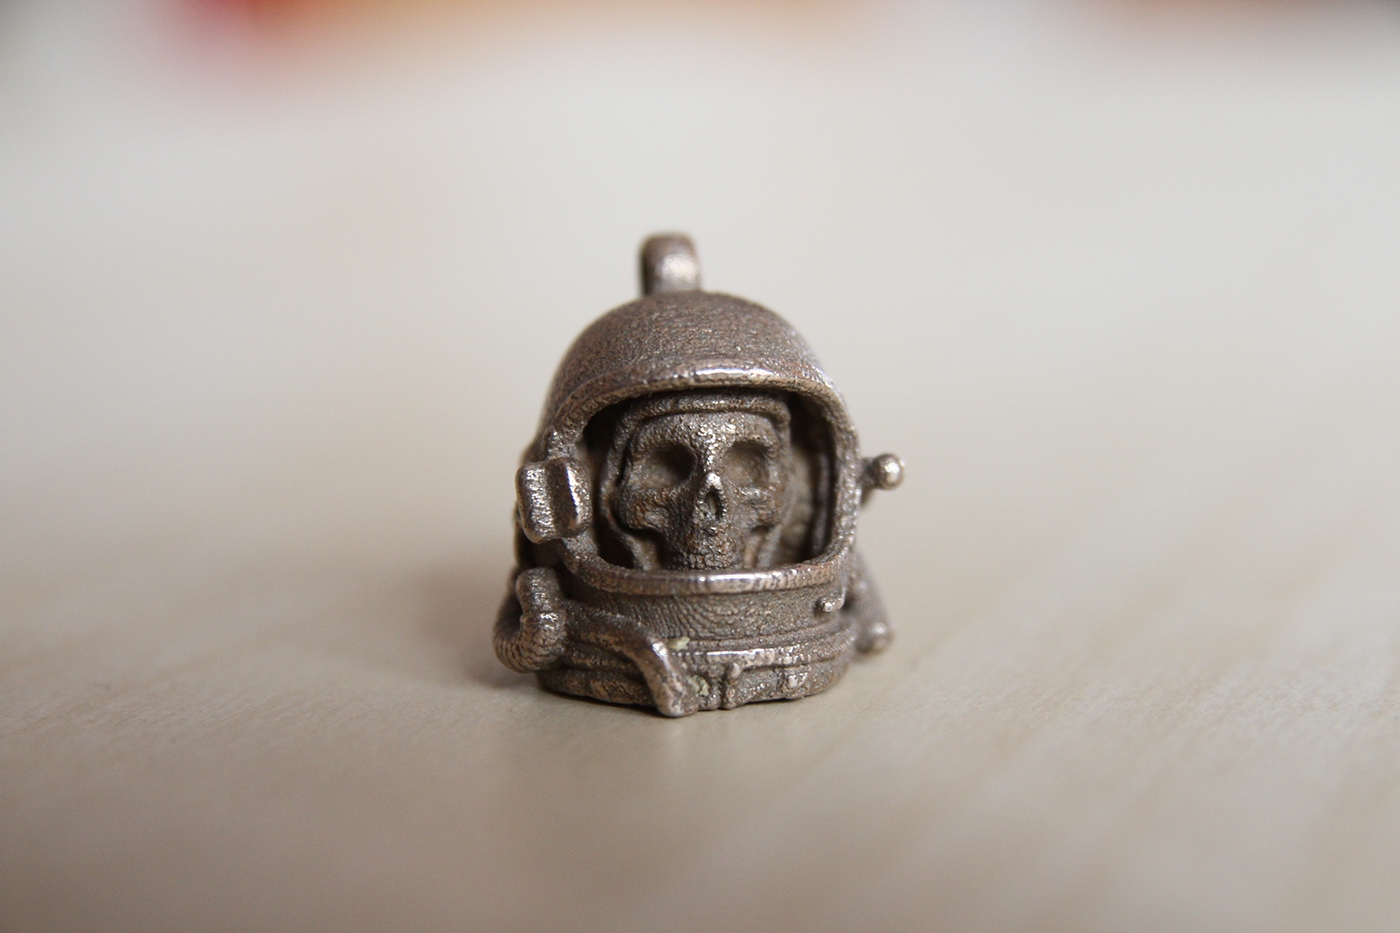 3d print astronaut cosmonaut keychain Helmet russian star stainles steel brass silver pendant